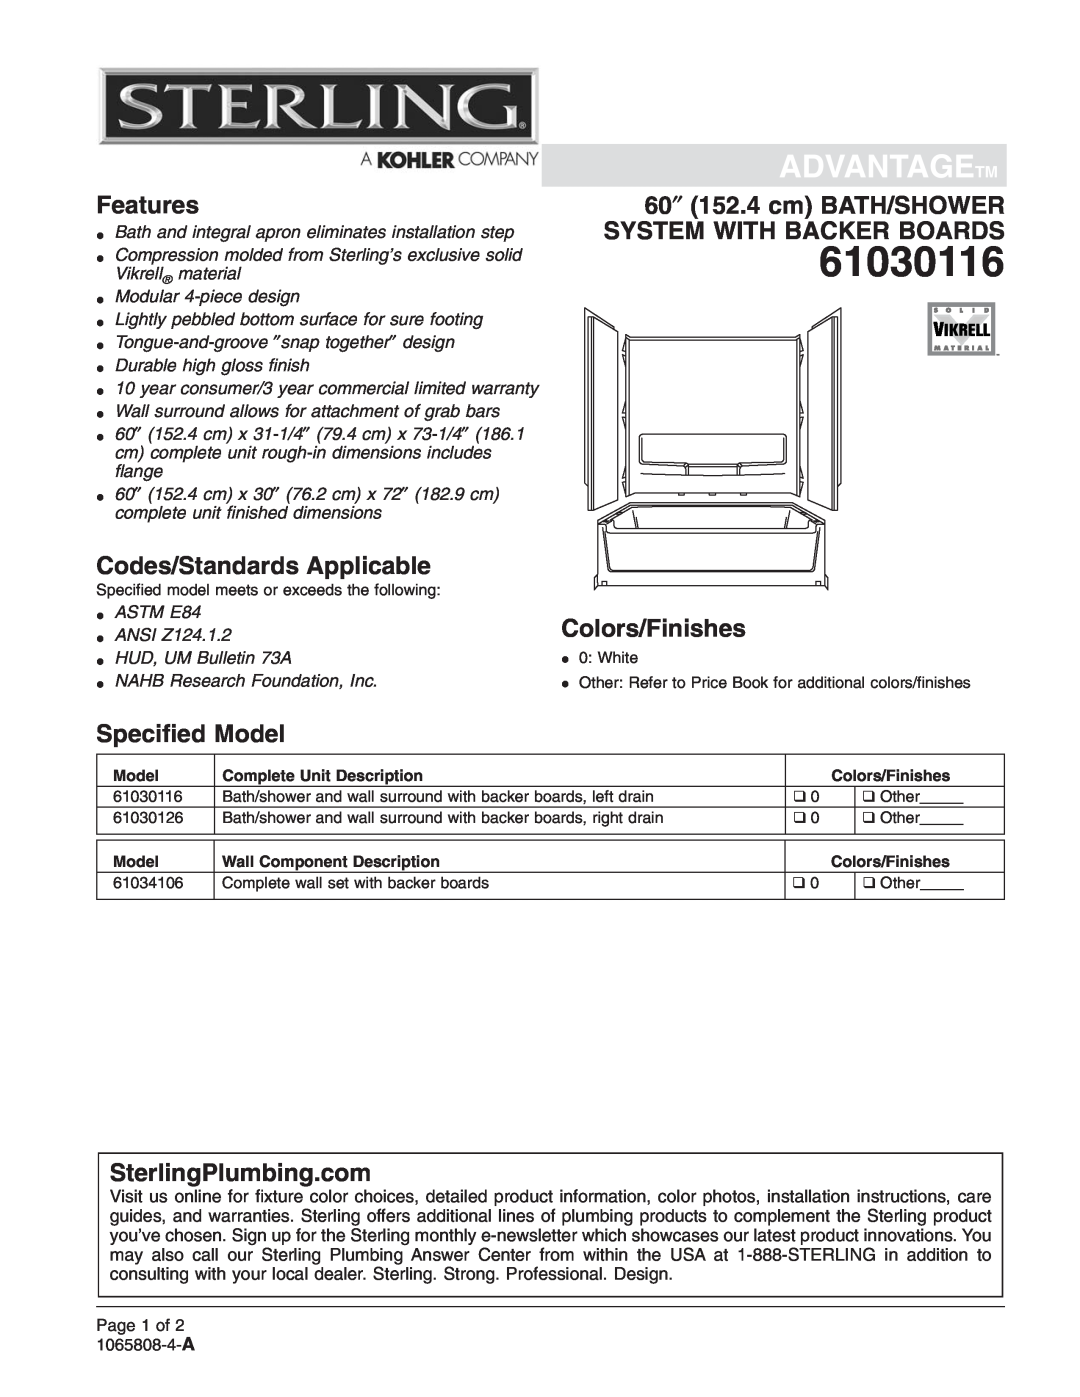 Sterling Plumbing 61030116 warranty Advantagetm, Features, Codes/Standards Applicable, 60″ 152.4 cm BATH/SHOWER 